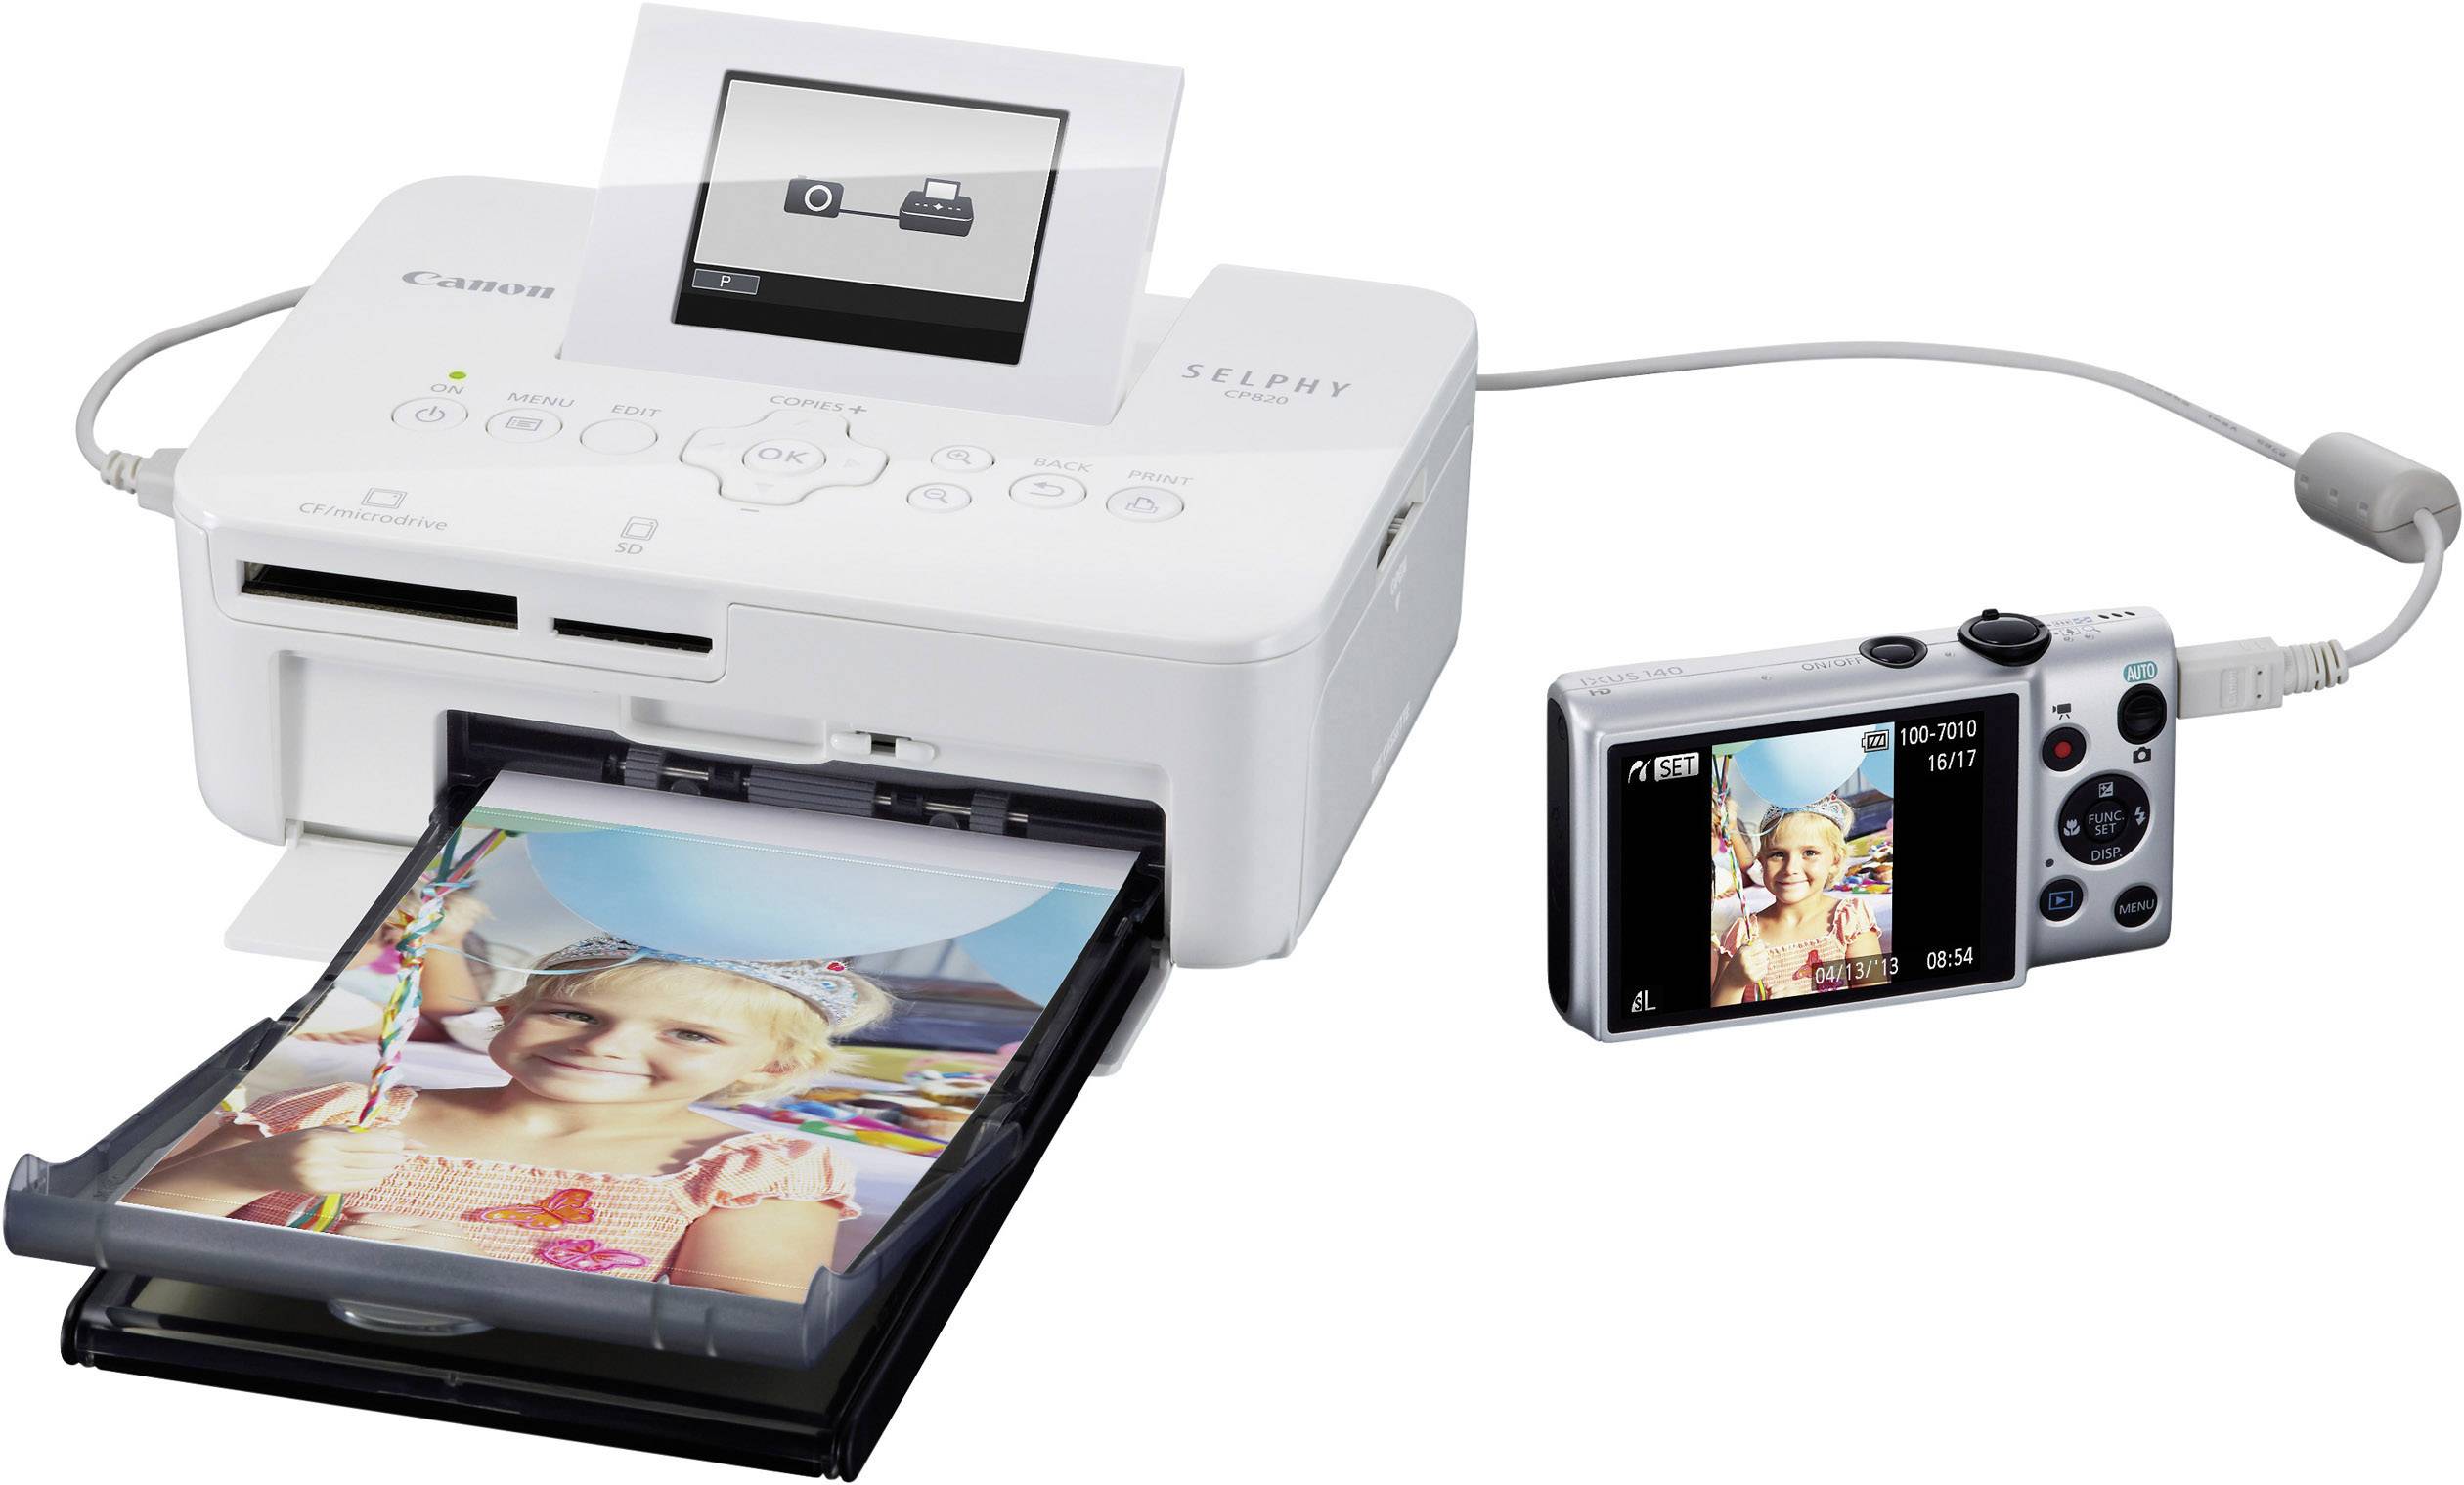 Canon Selphy Cp820 Photo Printer Print Resolution 300 X 300 Dpi Paper Size Max 148 X 100 Mm 4246